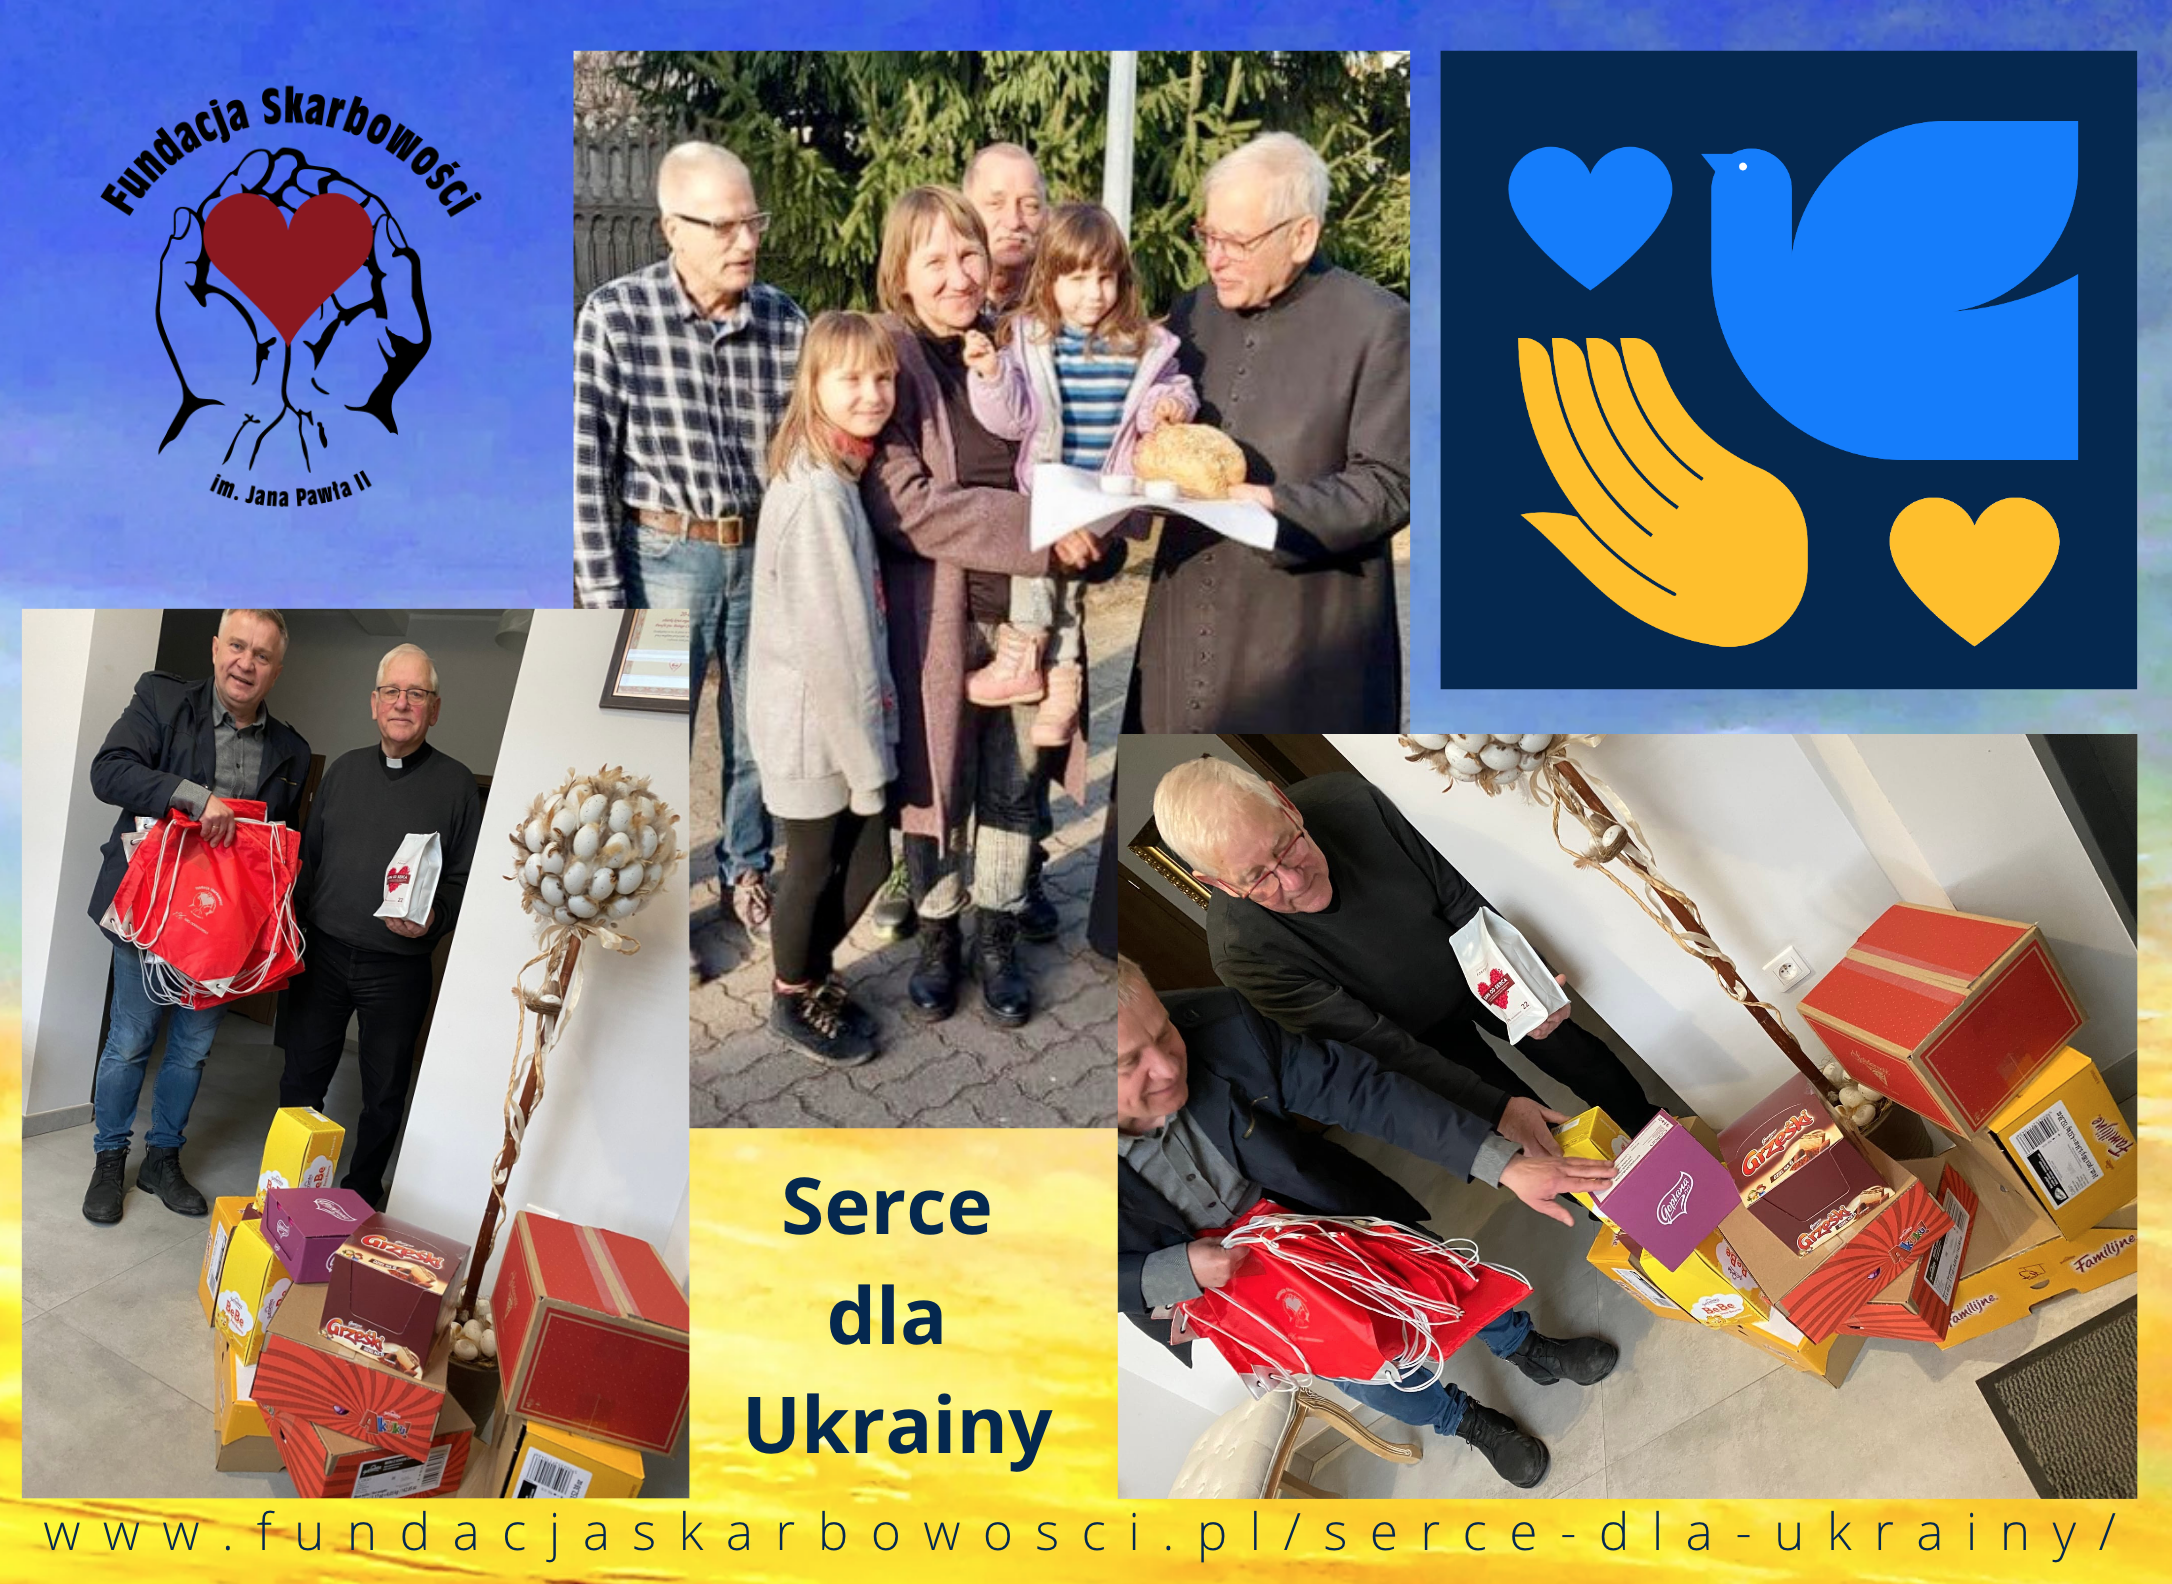 Serce dla Ukrainy!